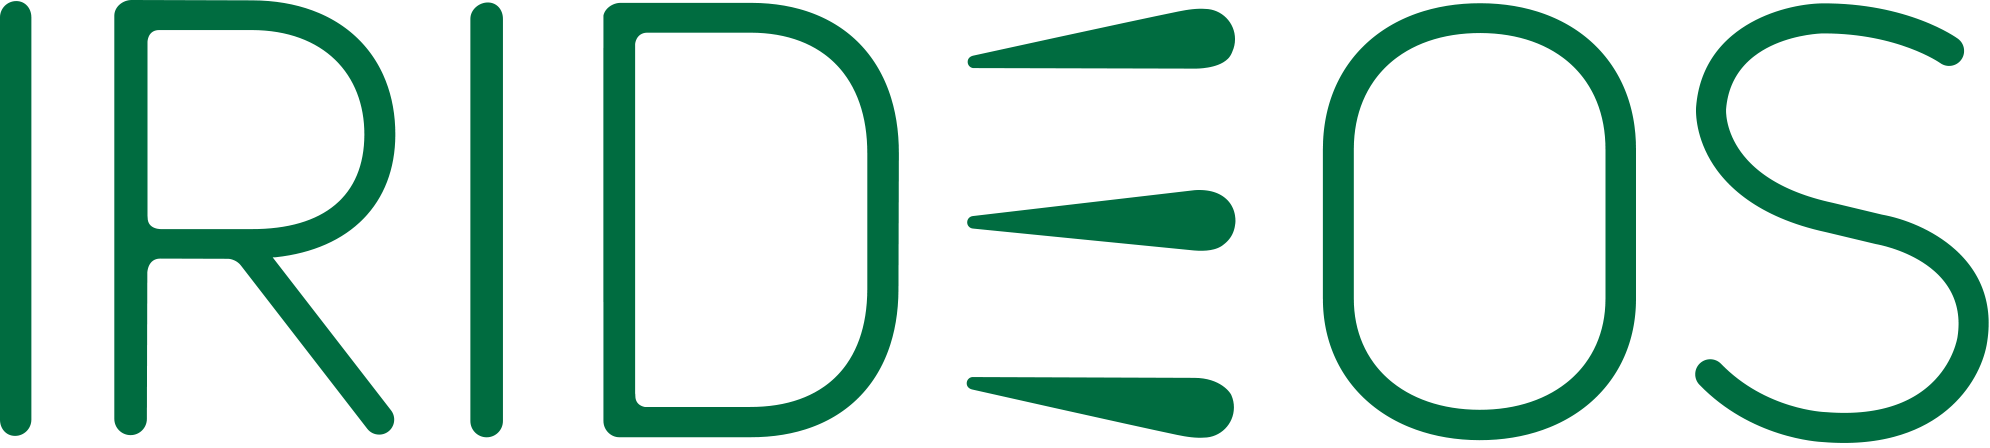 IRIDEOS logo